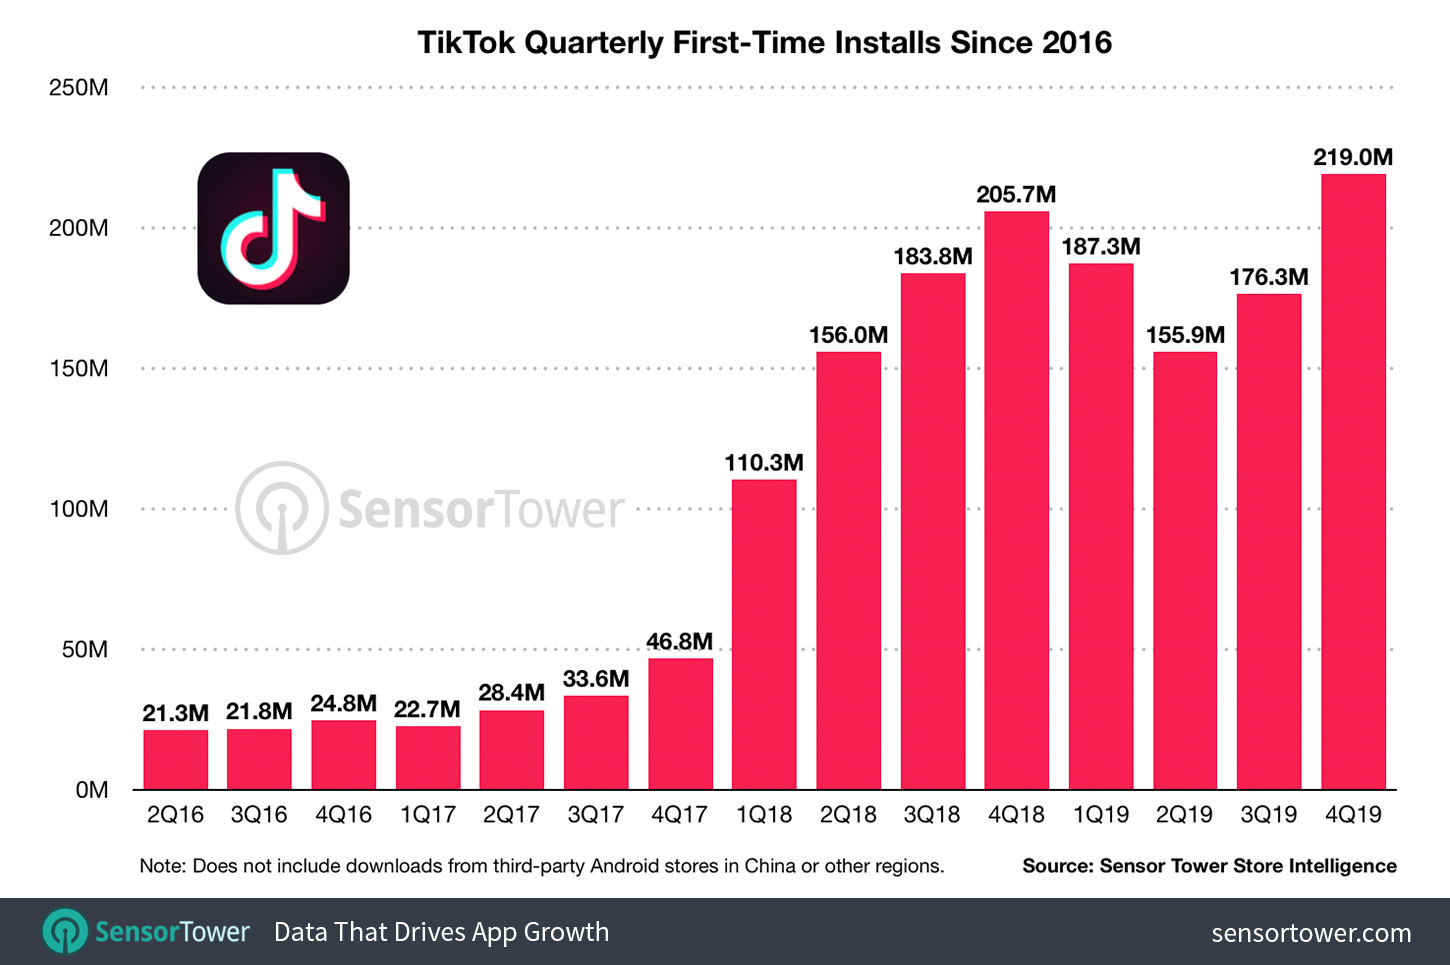 TikTok Installs by Quarter Since 2016